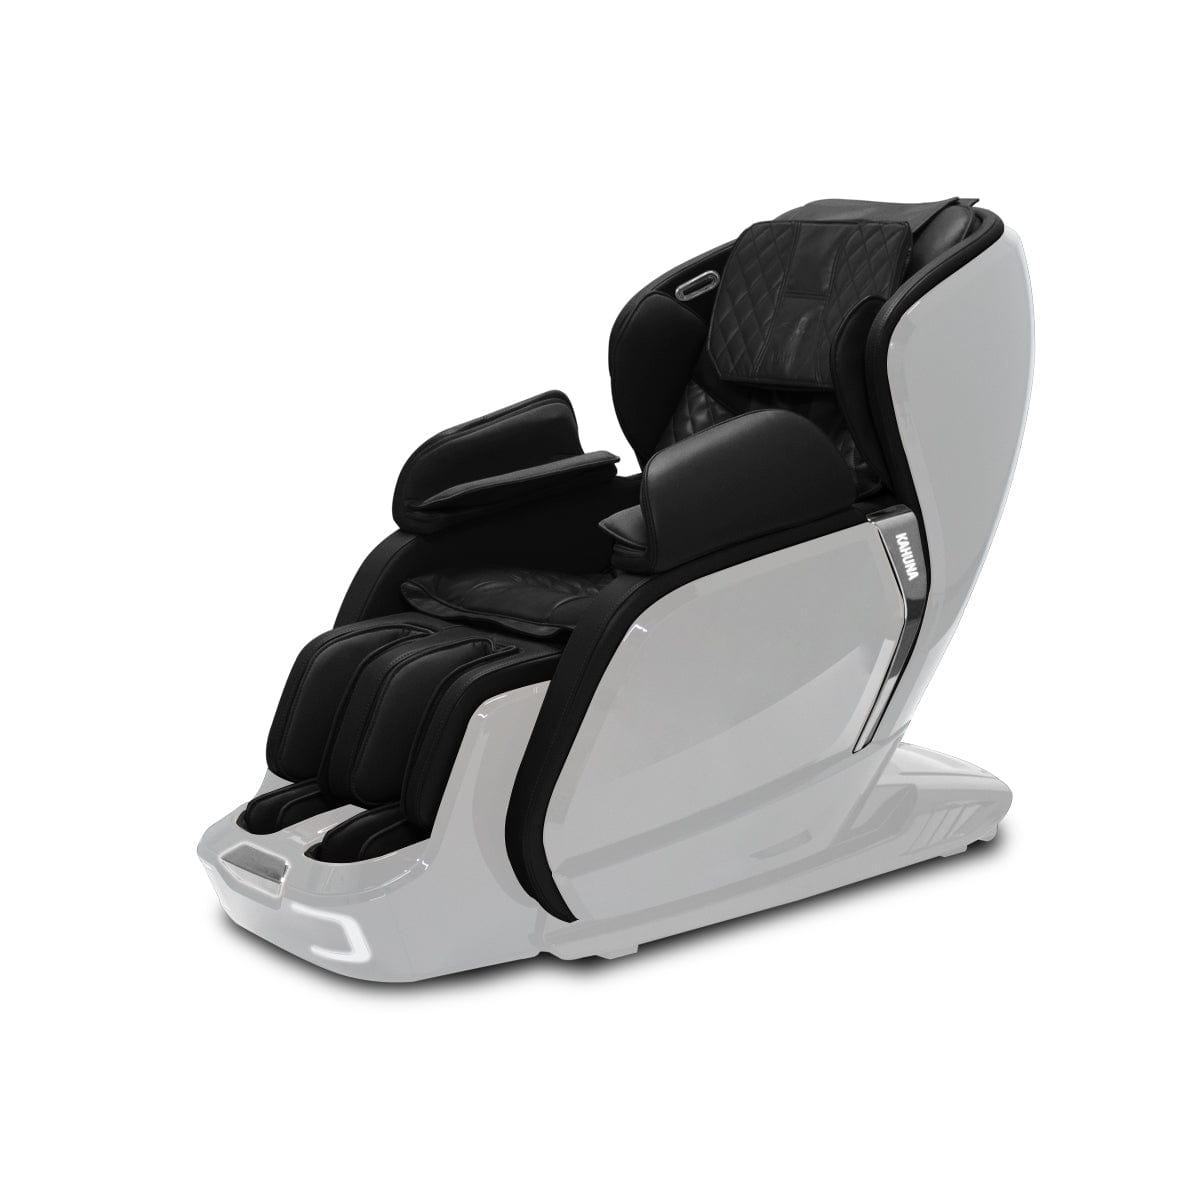 Kahuna Chair – LM-6800T White/Black - Massage Chair